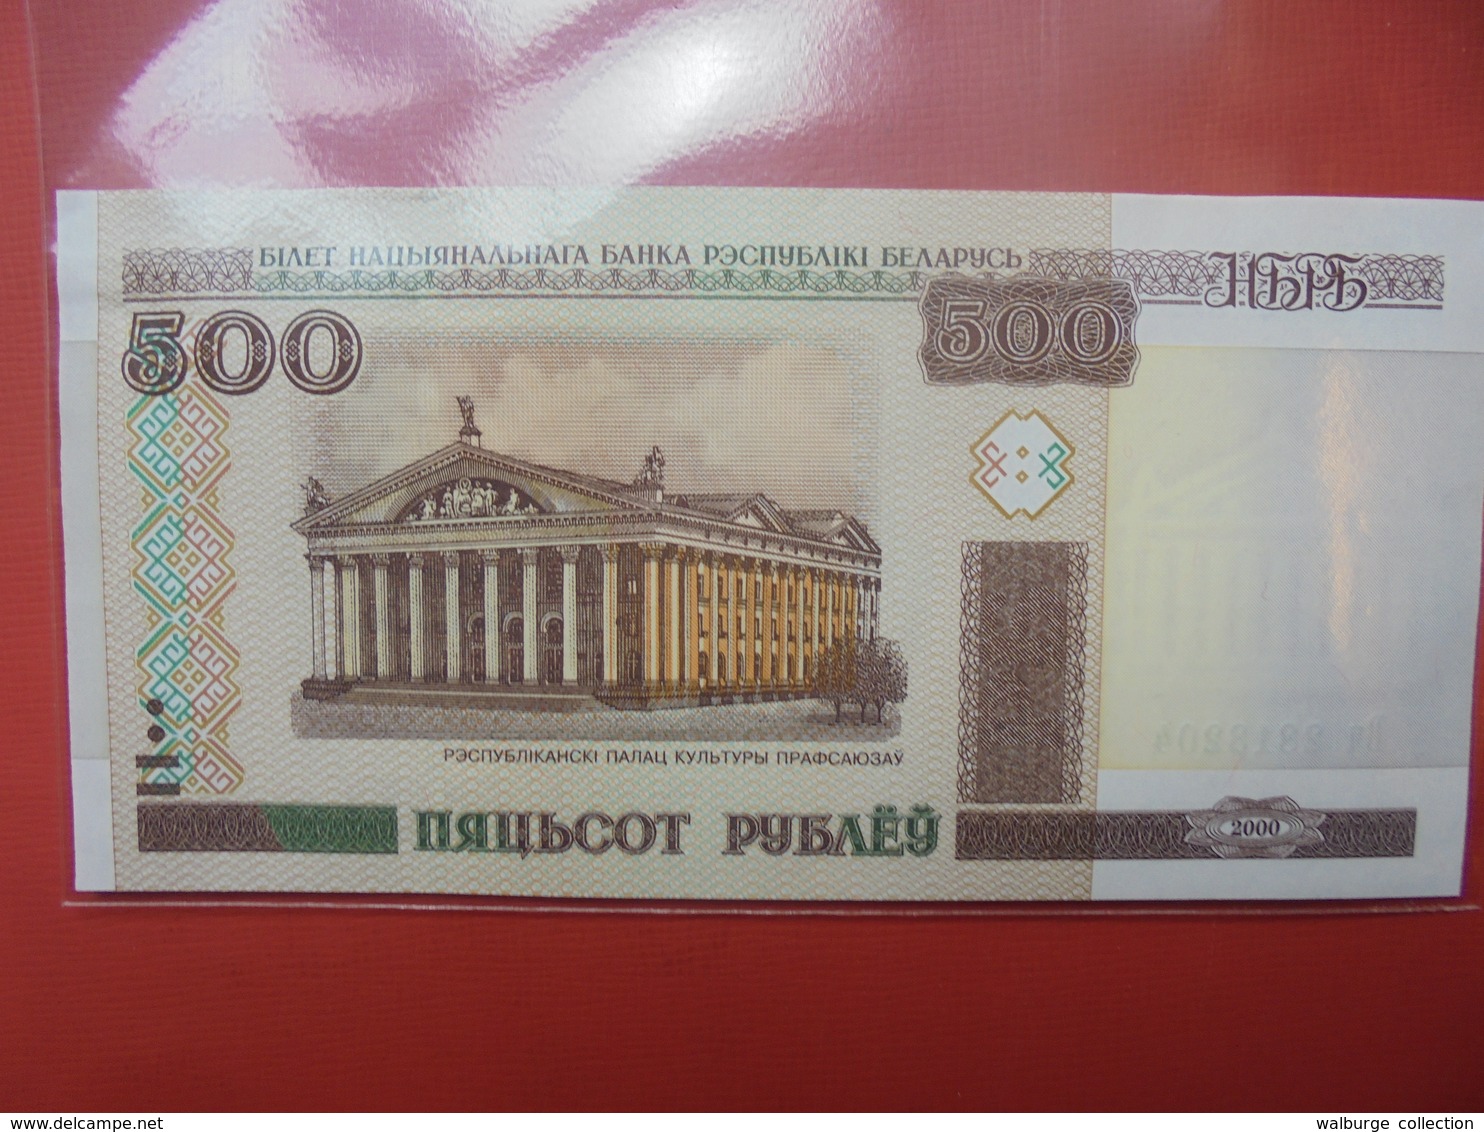 BELARUS 500 ROUBLES 2000 PEU CIRCULER/NEUF - Belarus